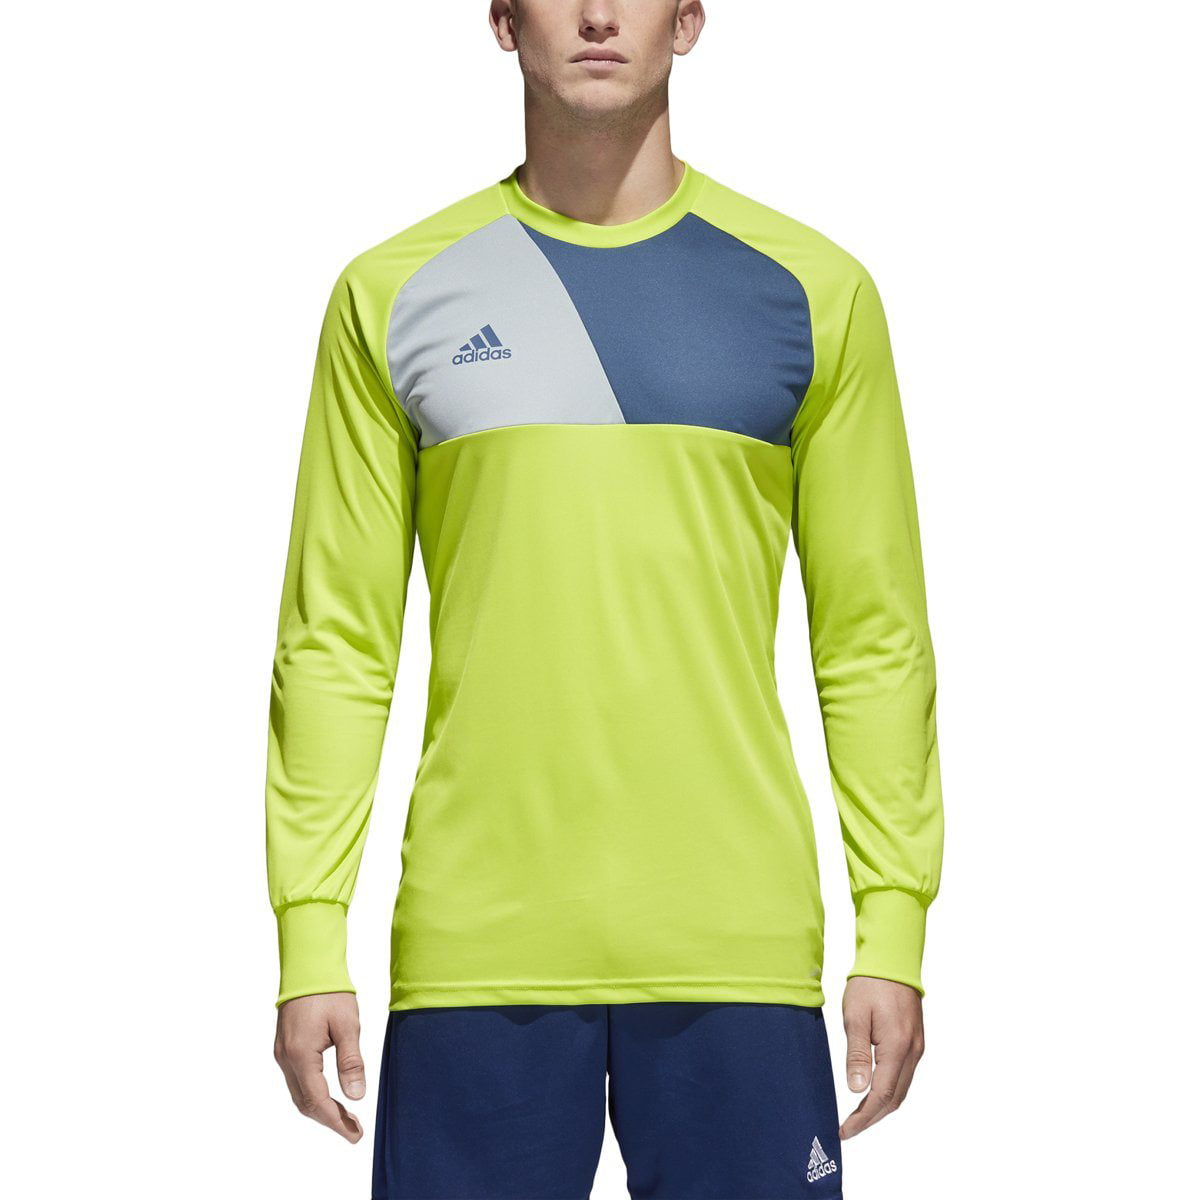 adidas men's soccer assita 17 goalkeeper jersey, solar slime/night marine/light grey, large